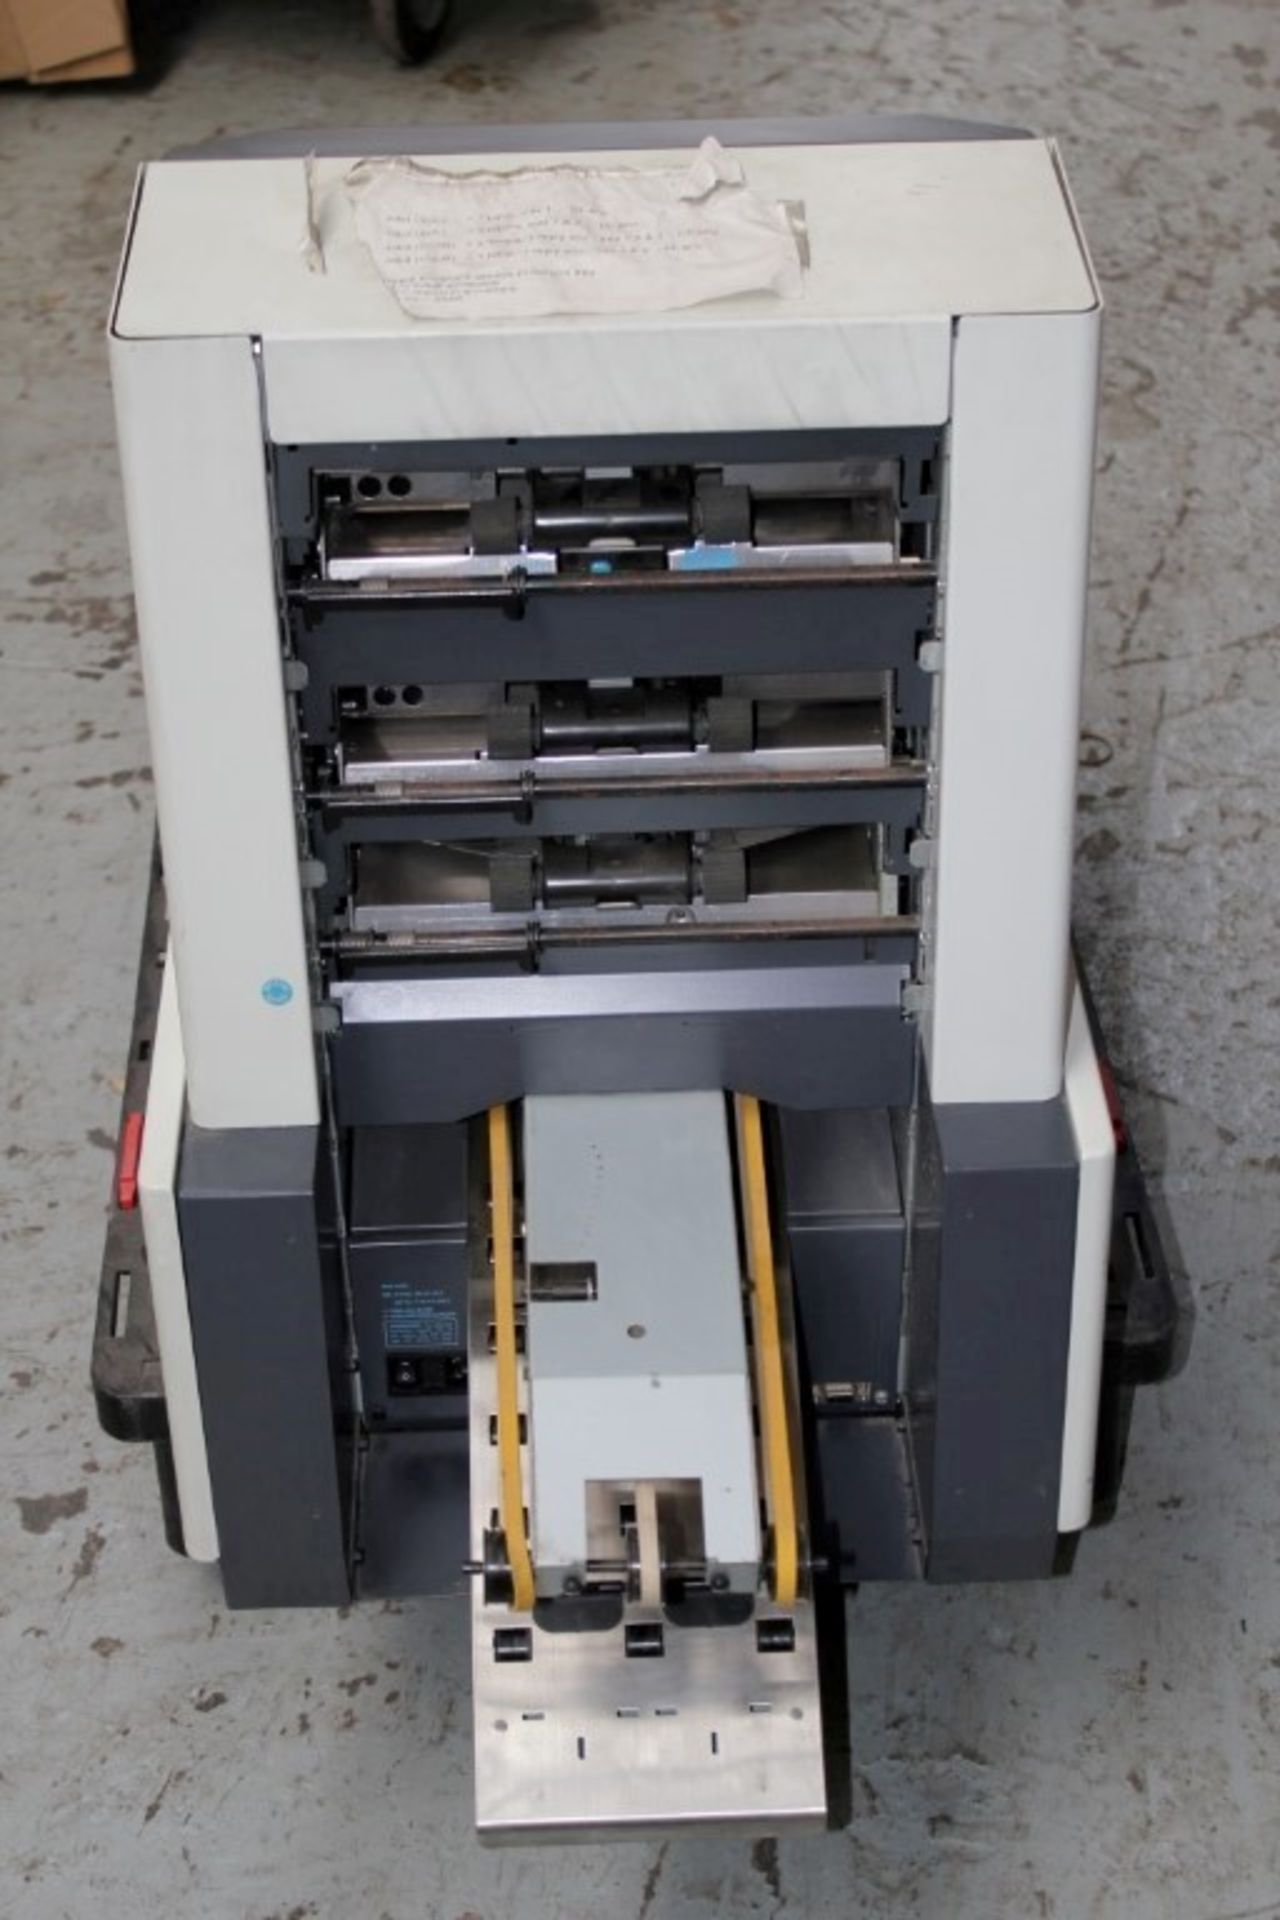 1 x Francotyp-Postalia Franking Machine - Sold As Seen - CL011 - Location: Altrincham WA14 Item - Image 2 of 6